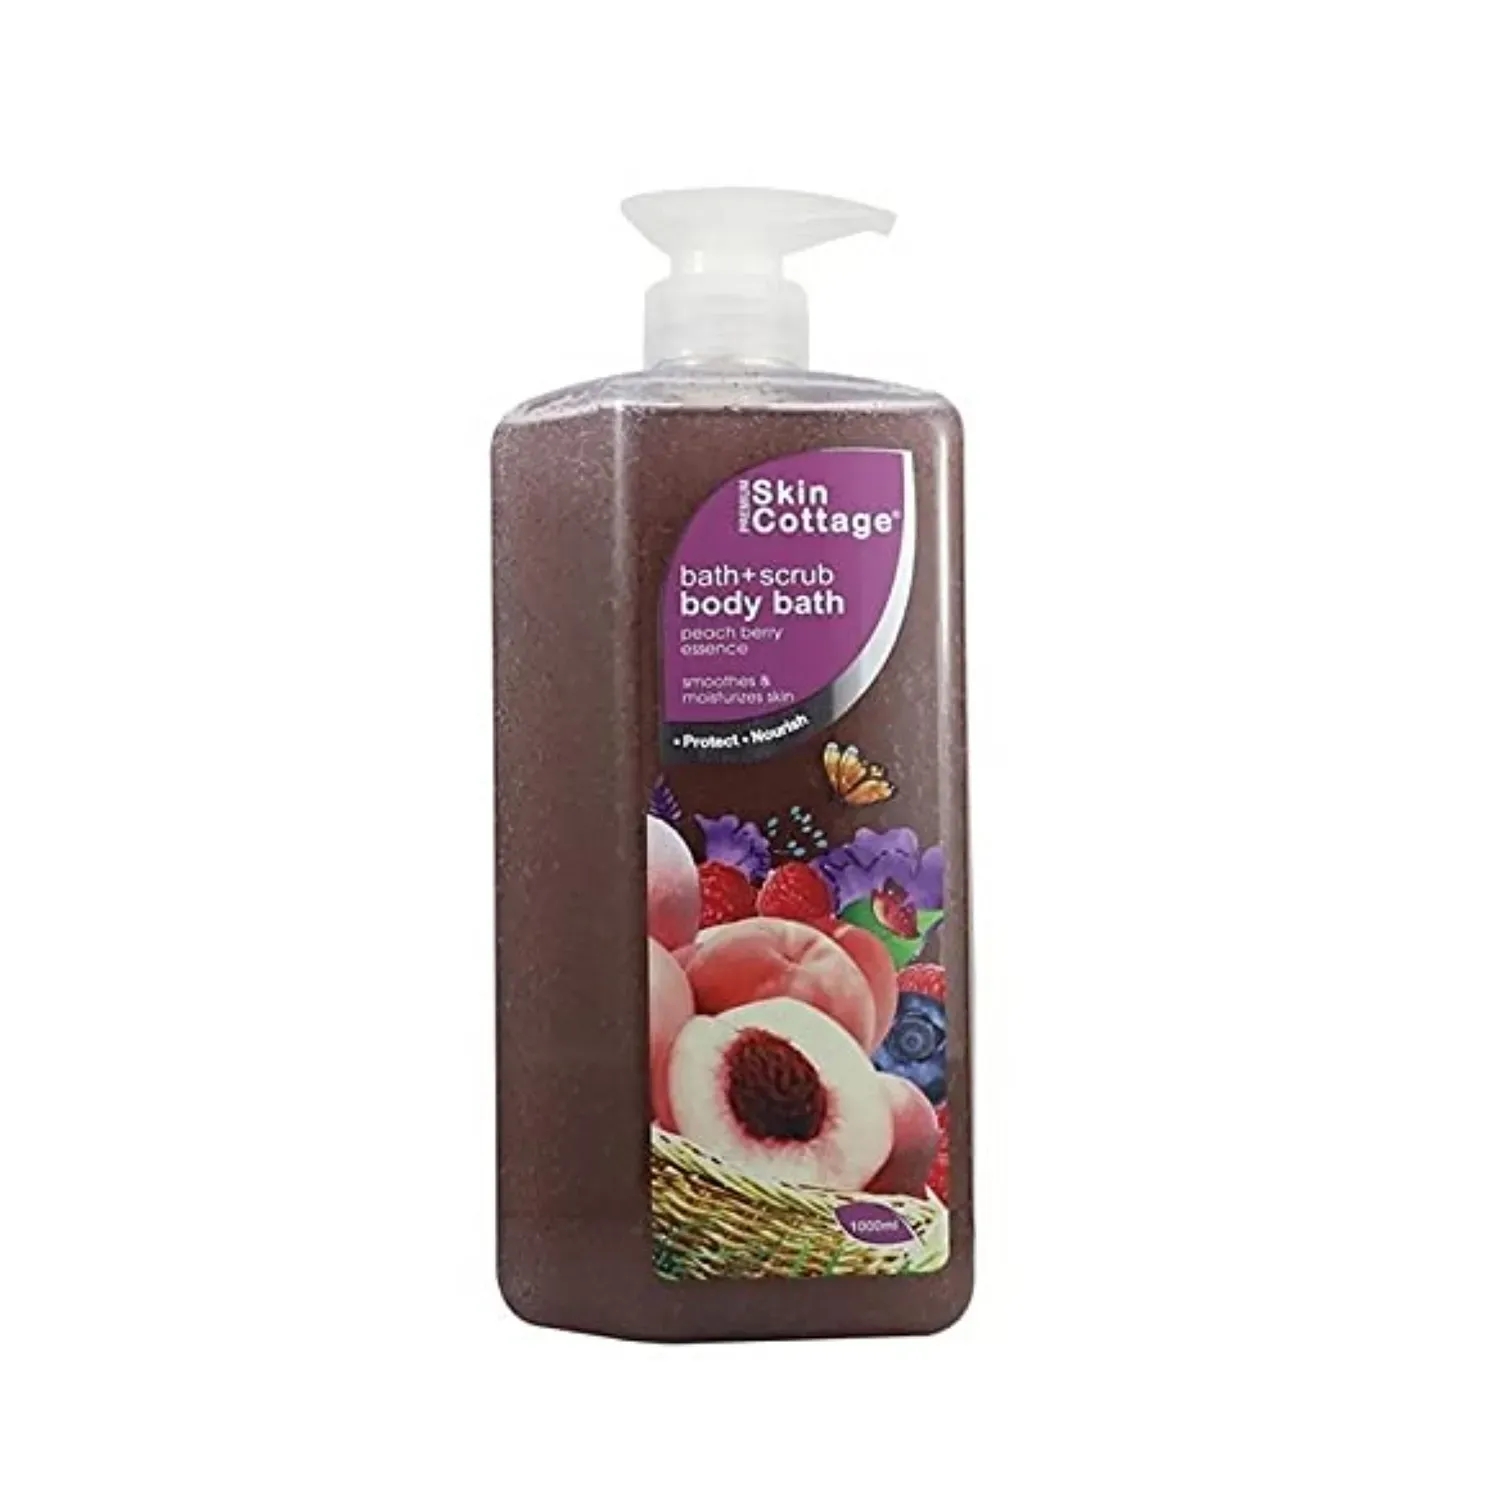 SKIN COTTAGE | SKIN COTTAGE Peach Berry Essence Body Bath + Scrub (1000ml)